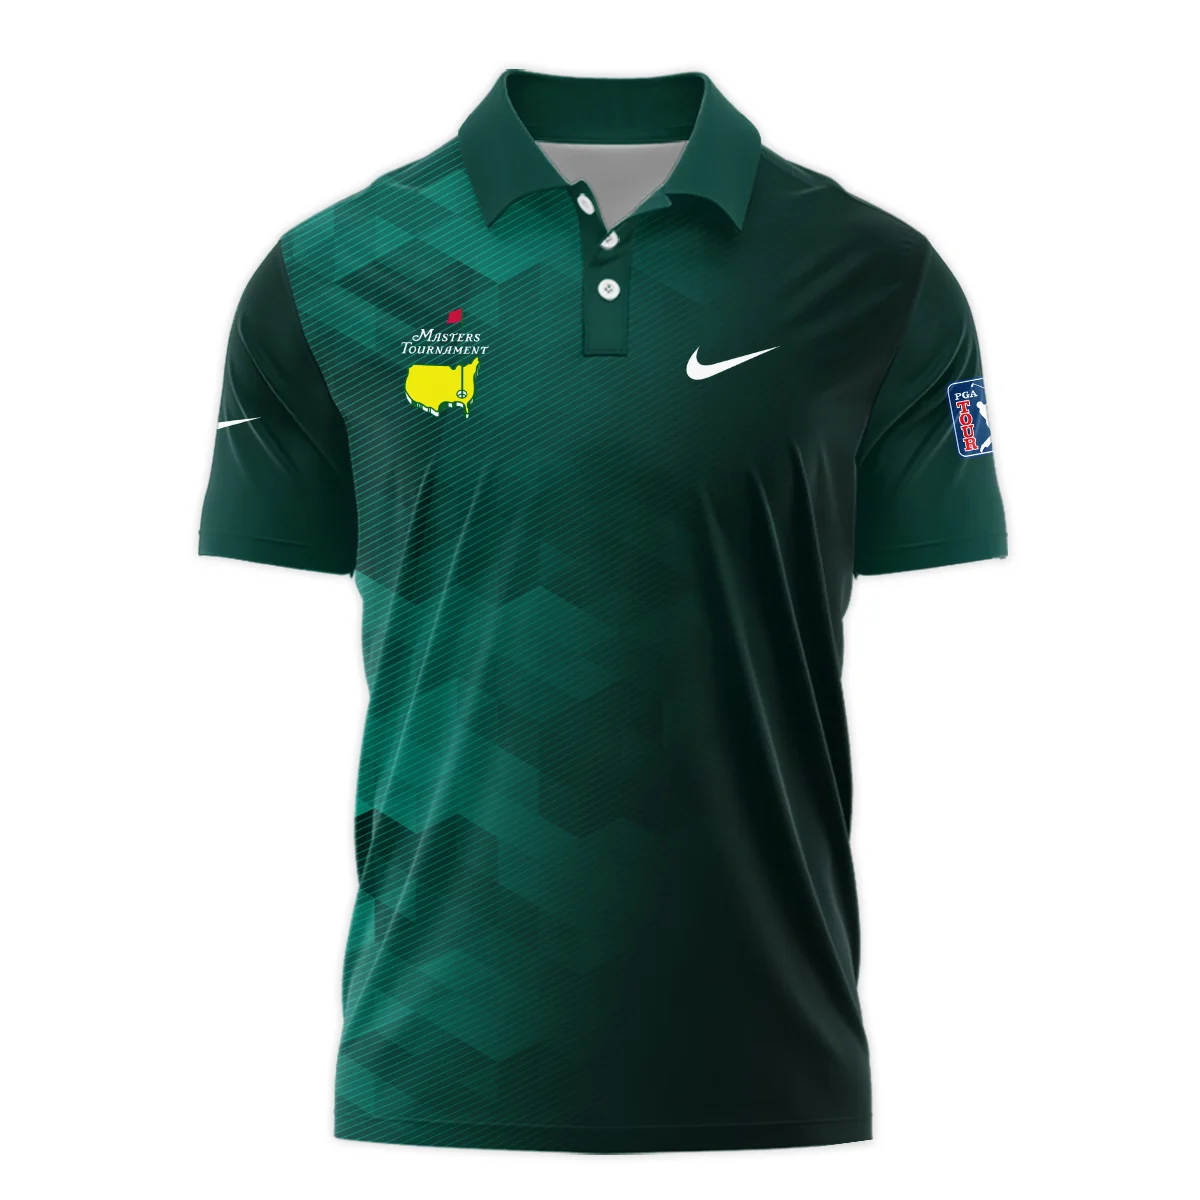 Nike Golf Sport Dark Green Gradient Abstract Background Masters Tournament Sleeveless Jacket Style Classic Sleeveless Jacket